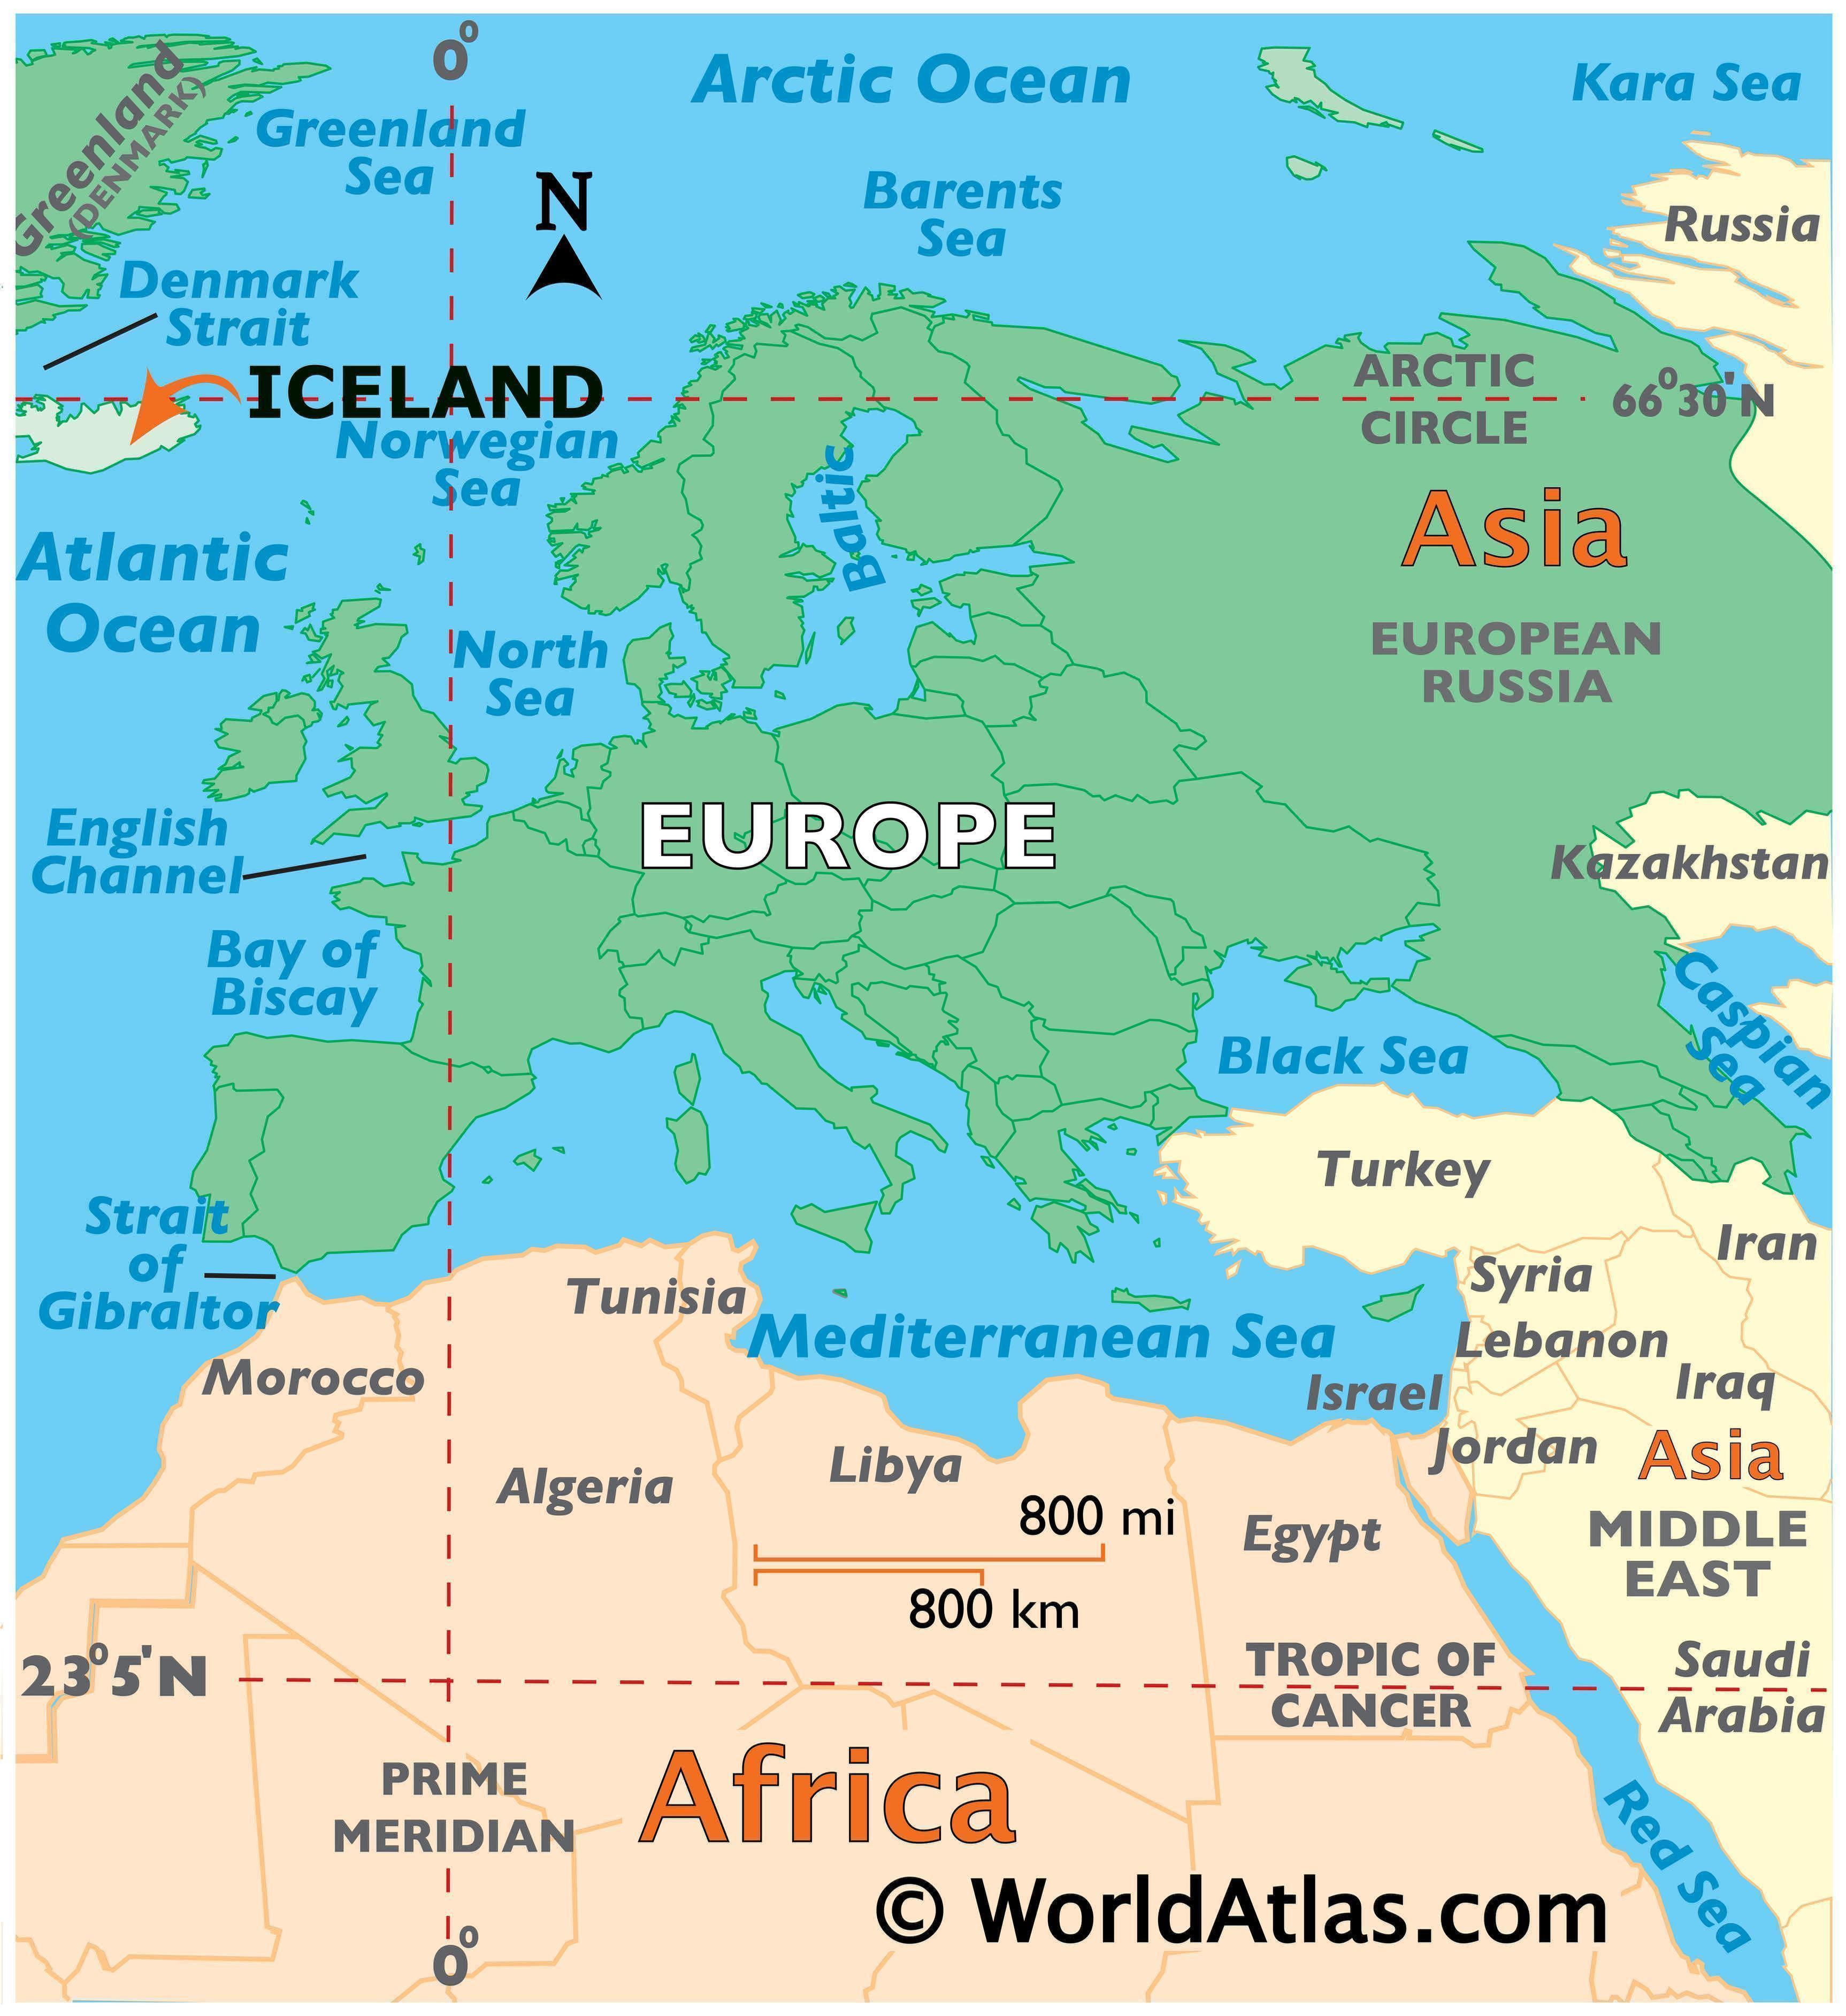 Iceland Map Geography Of Iceland Map Of Iceland Worldatlas Com